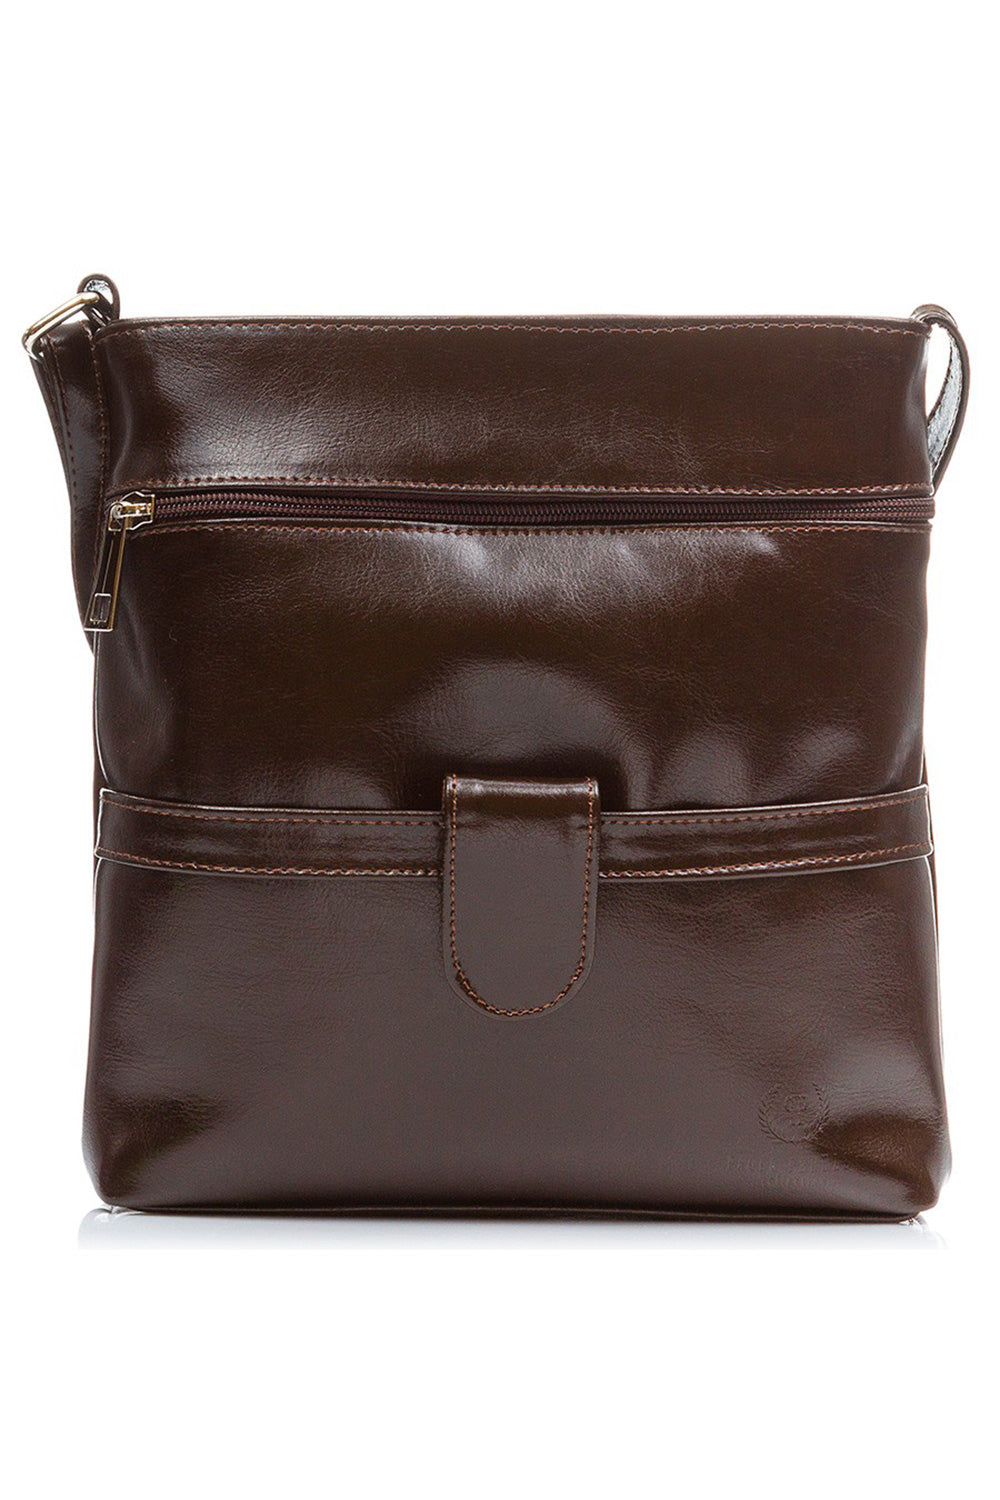 Natural leather bag model 173190 Elsy Style Casual Handbags, Shoulder Bags